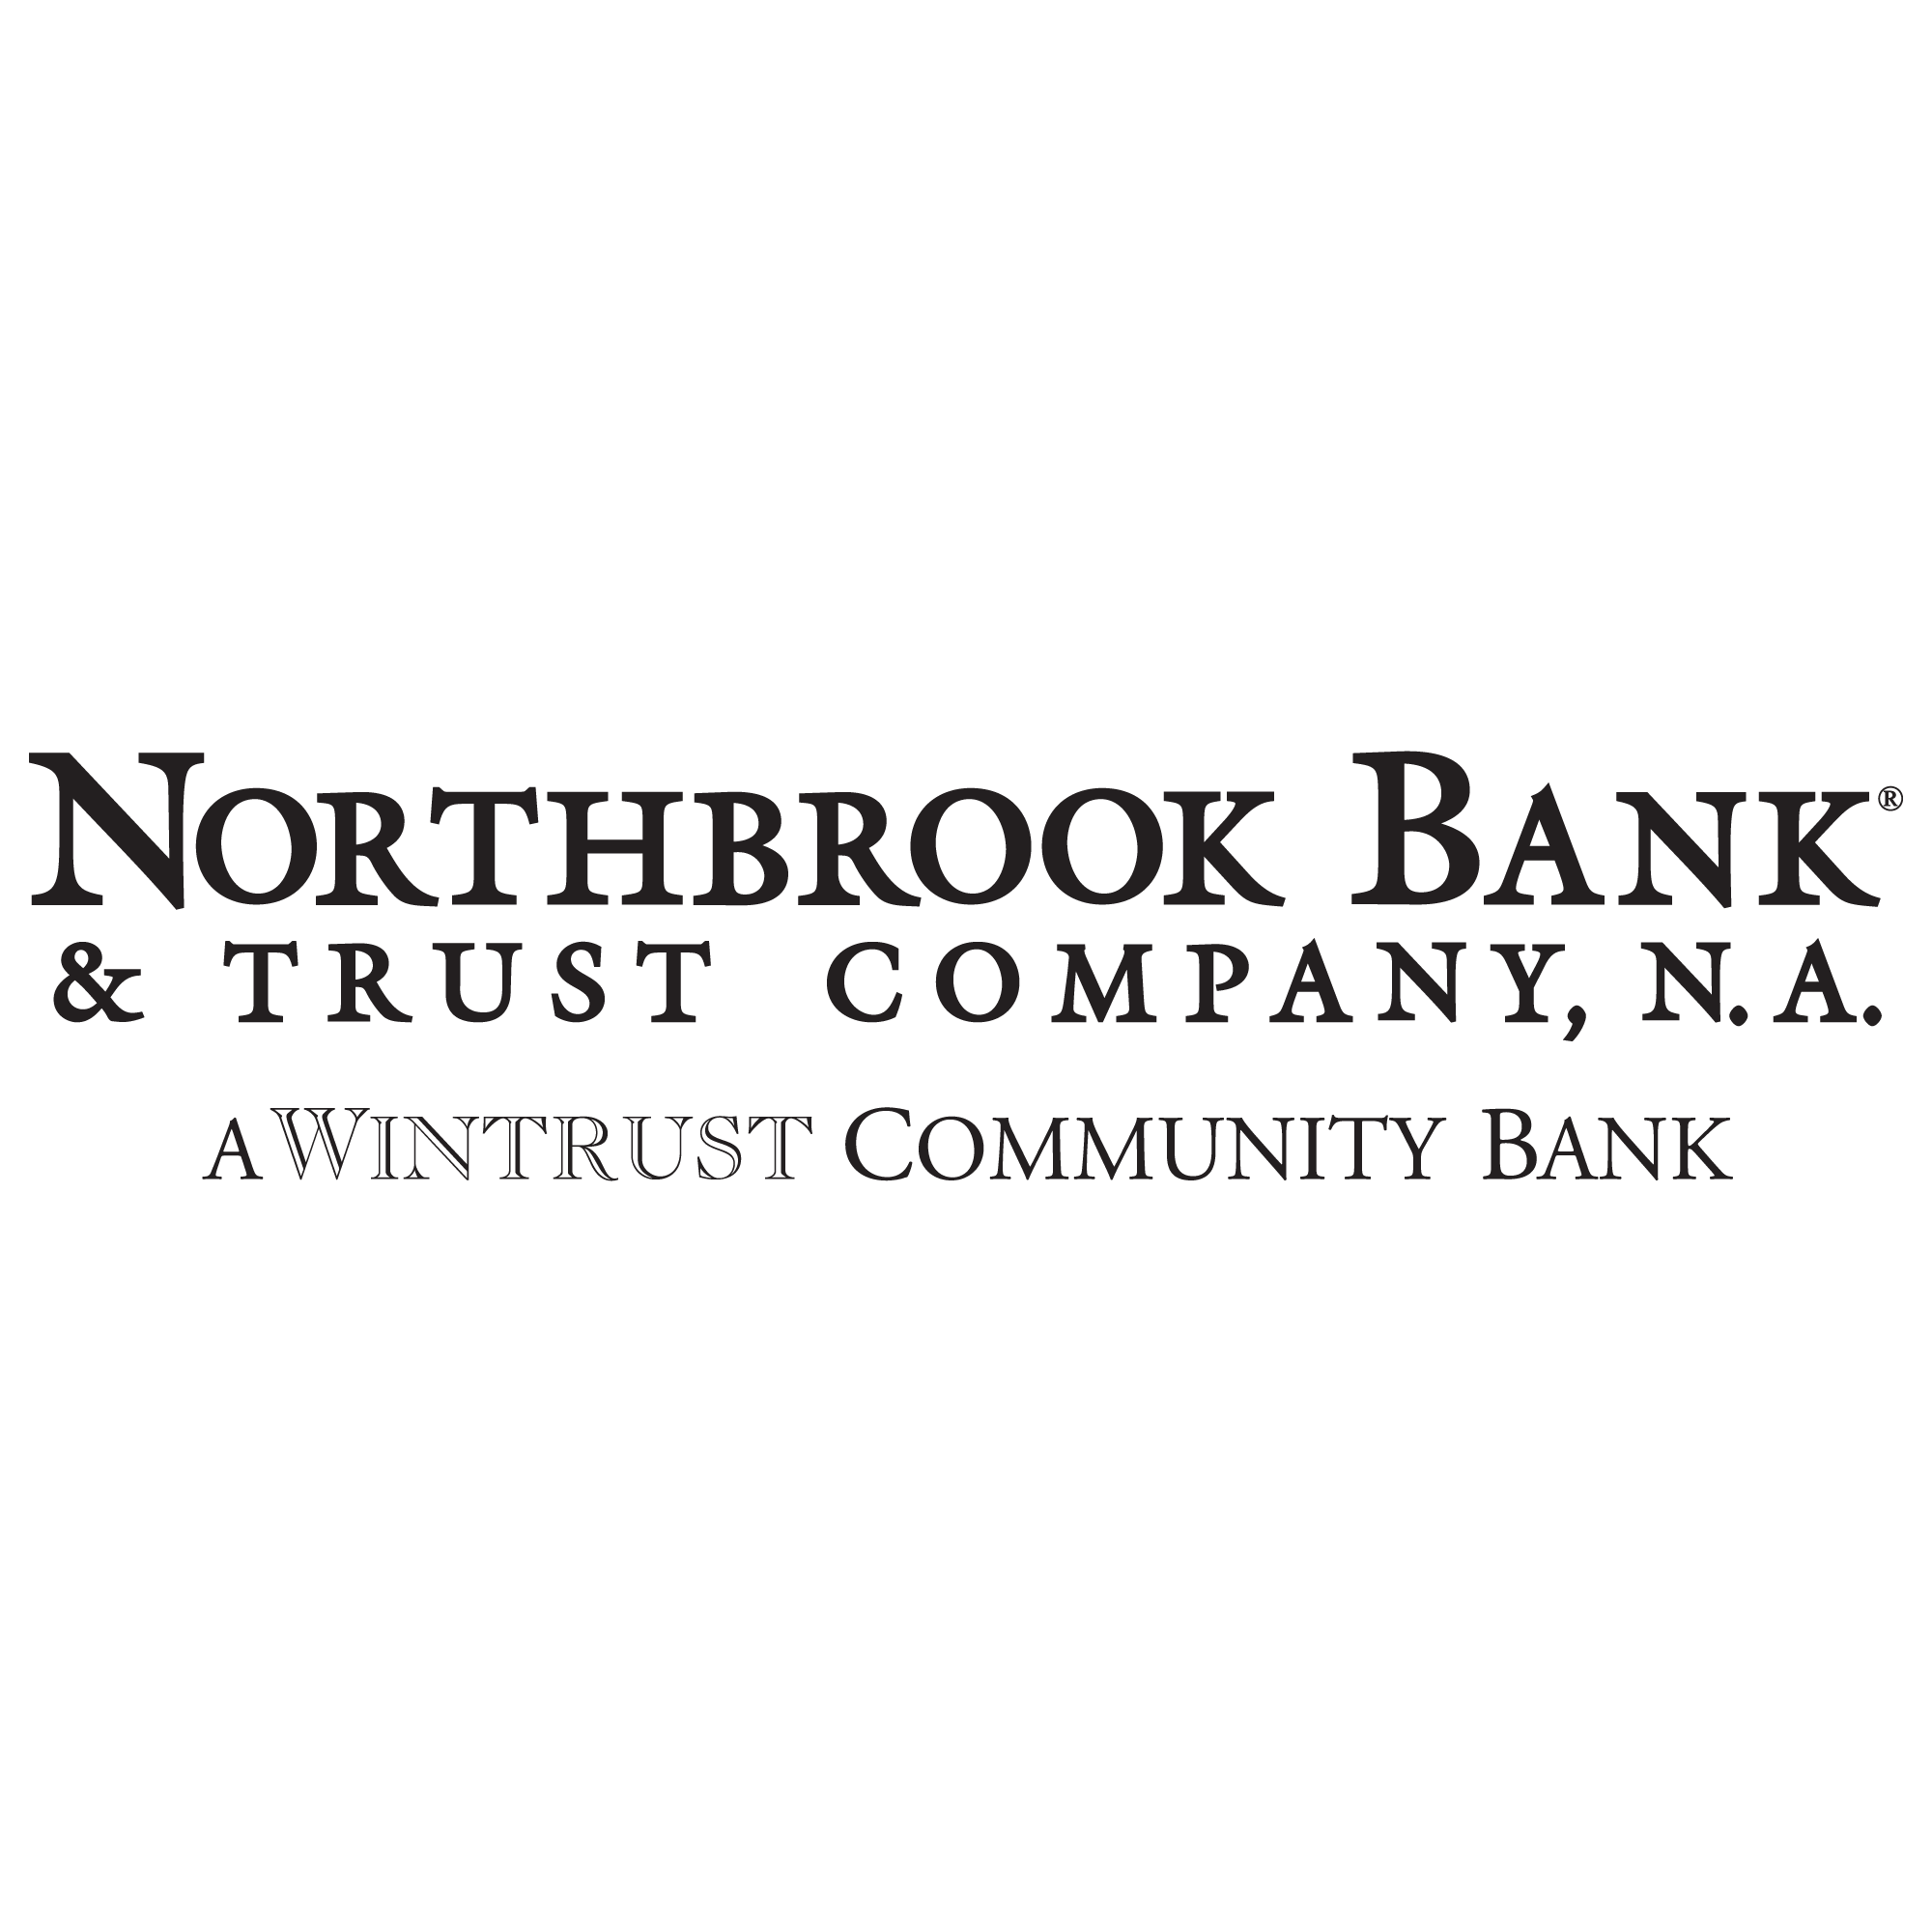 Northbrook Bank & Trust